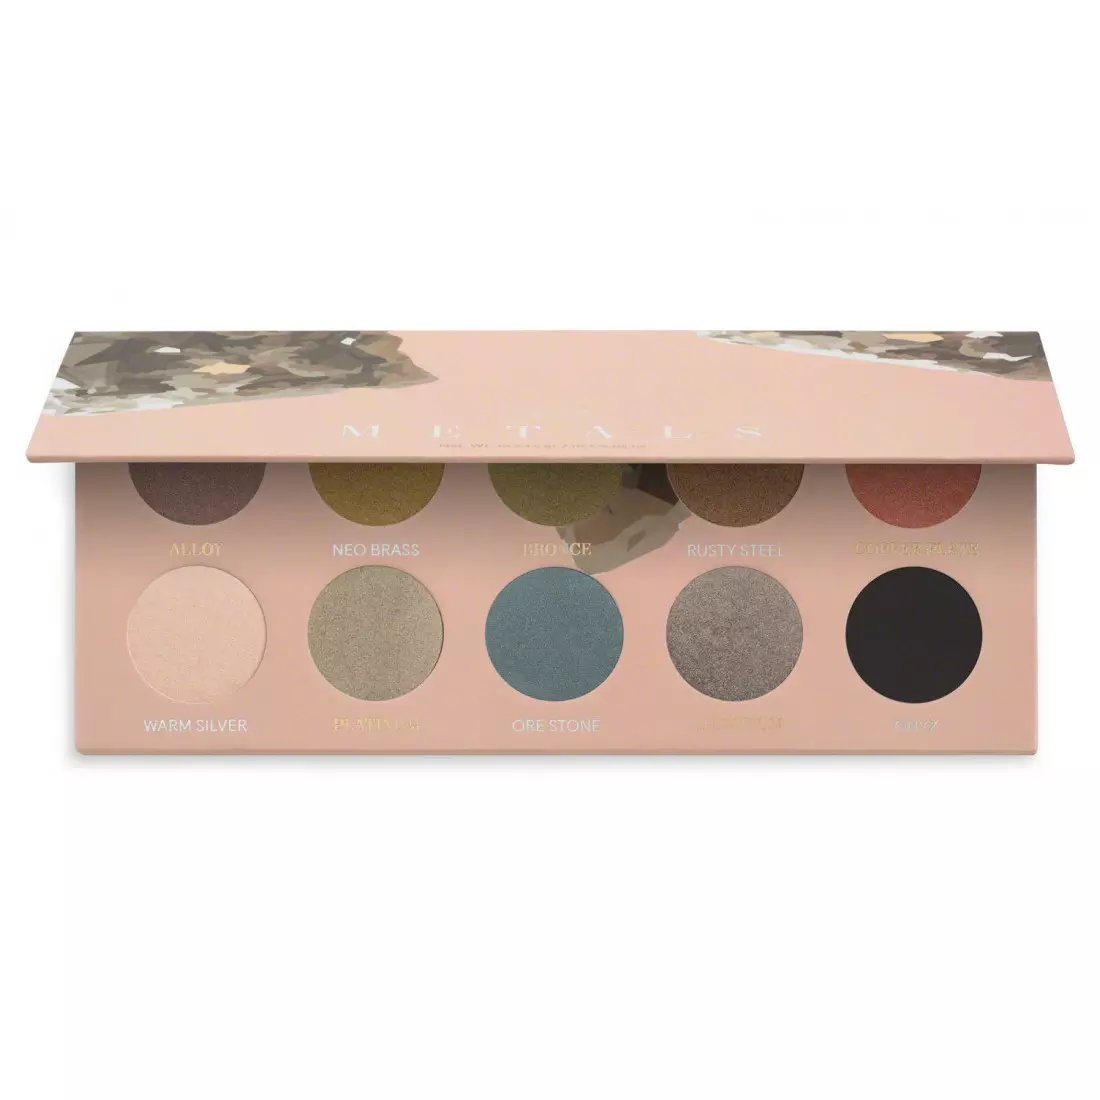 Eyeshadow Palette Mixed Metals | Glambot.com - deals on Zoeva cosmetics